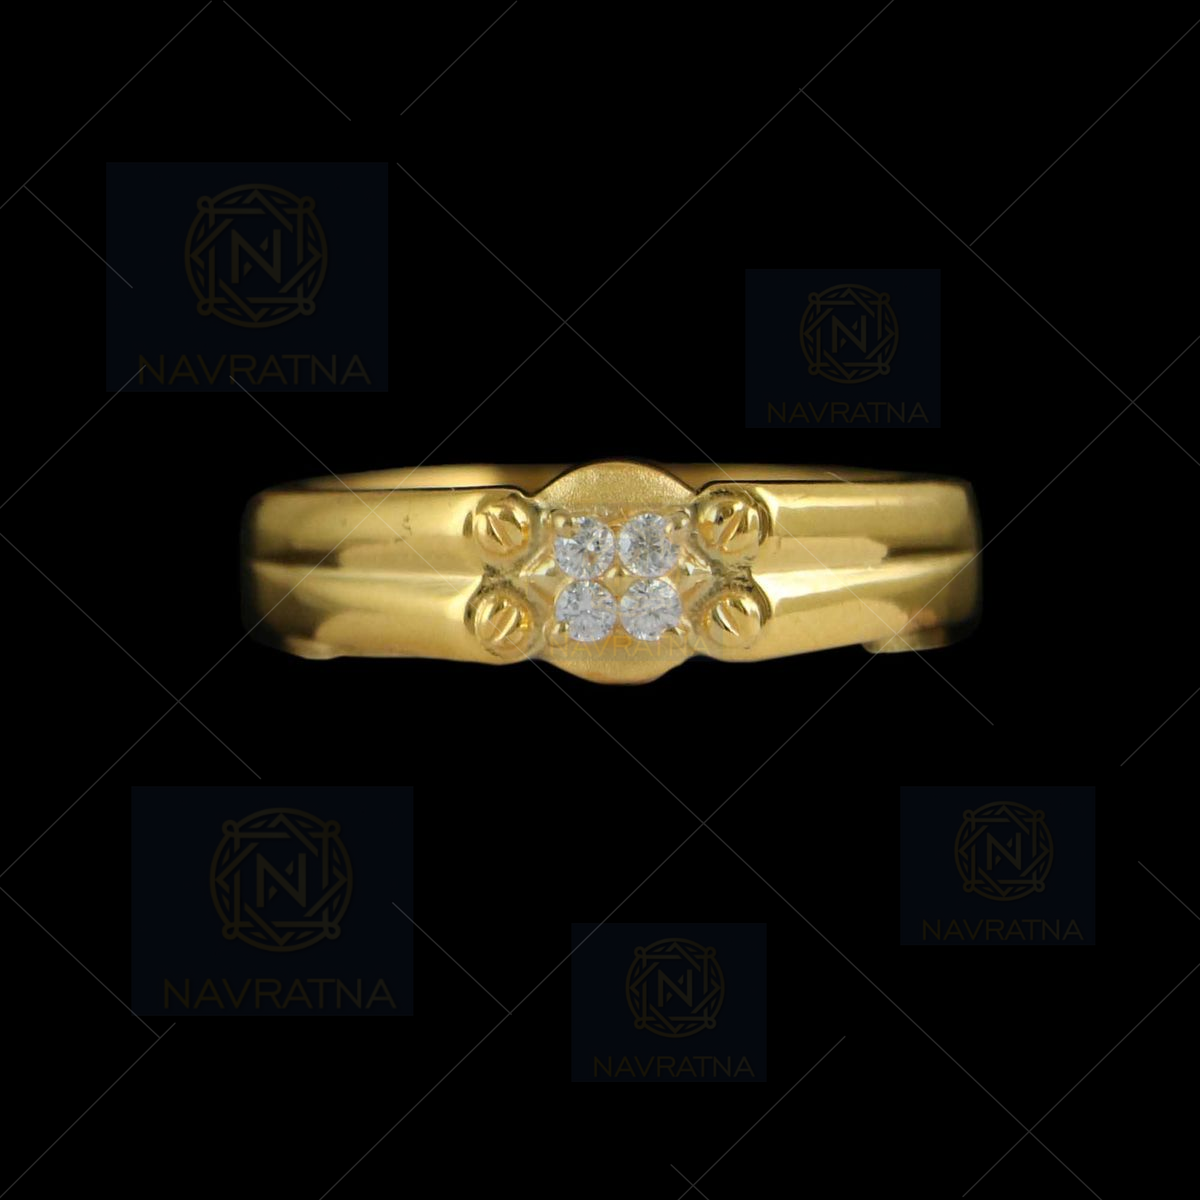 Premium Photo | China princess gold ring